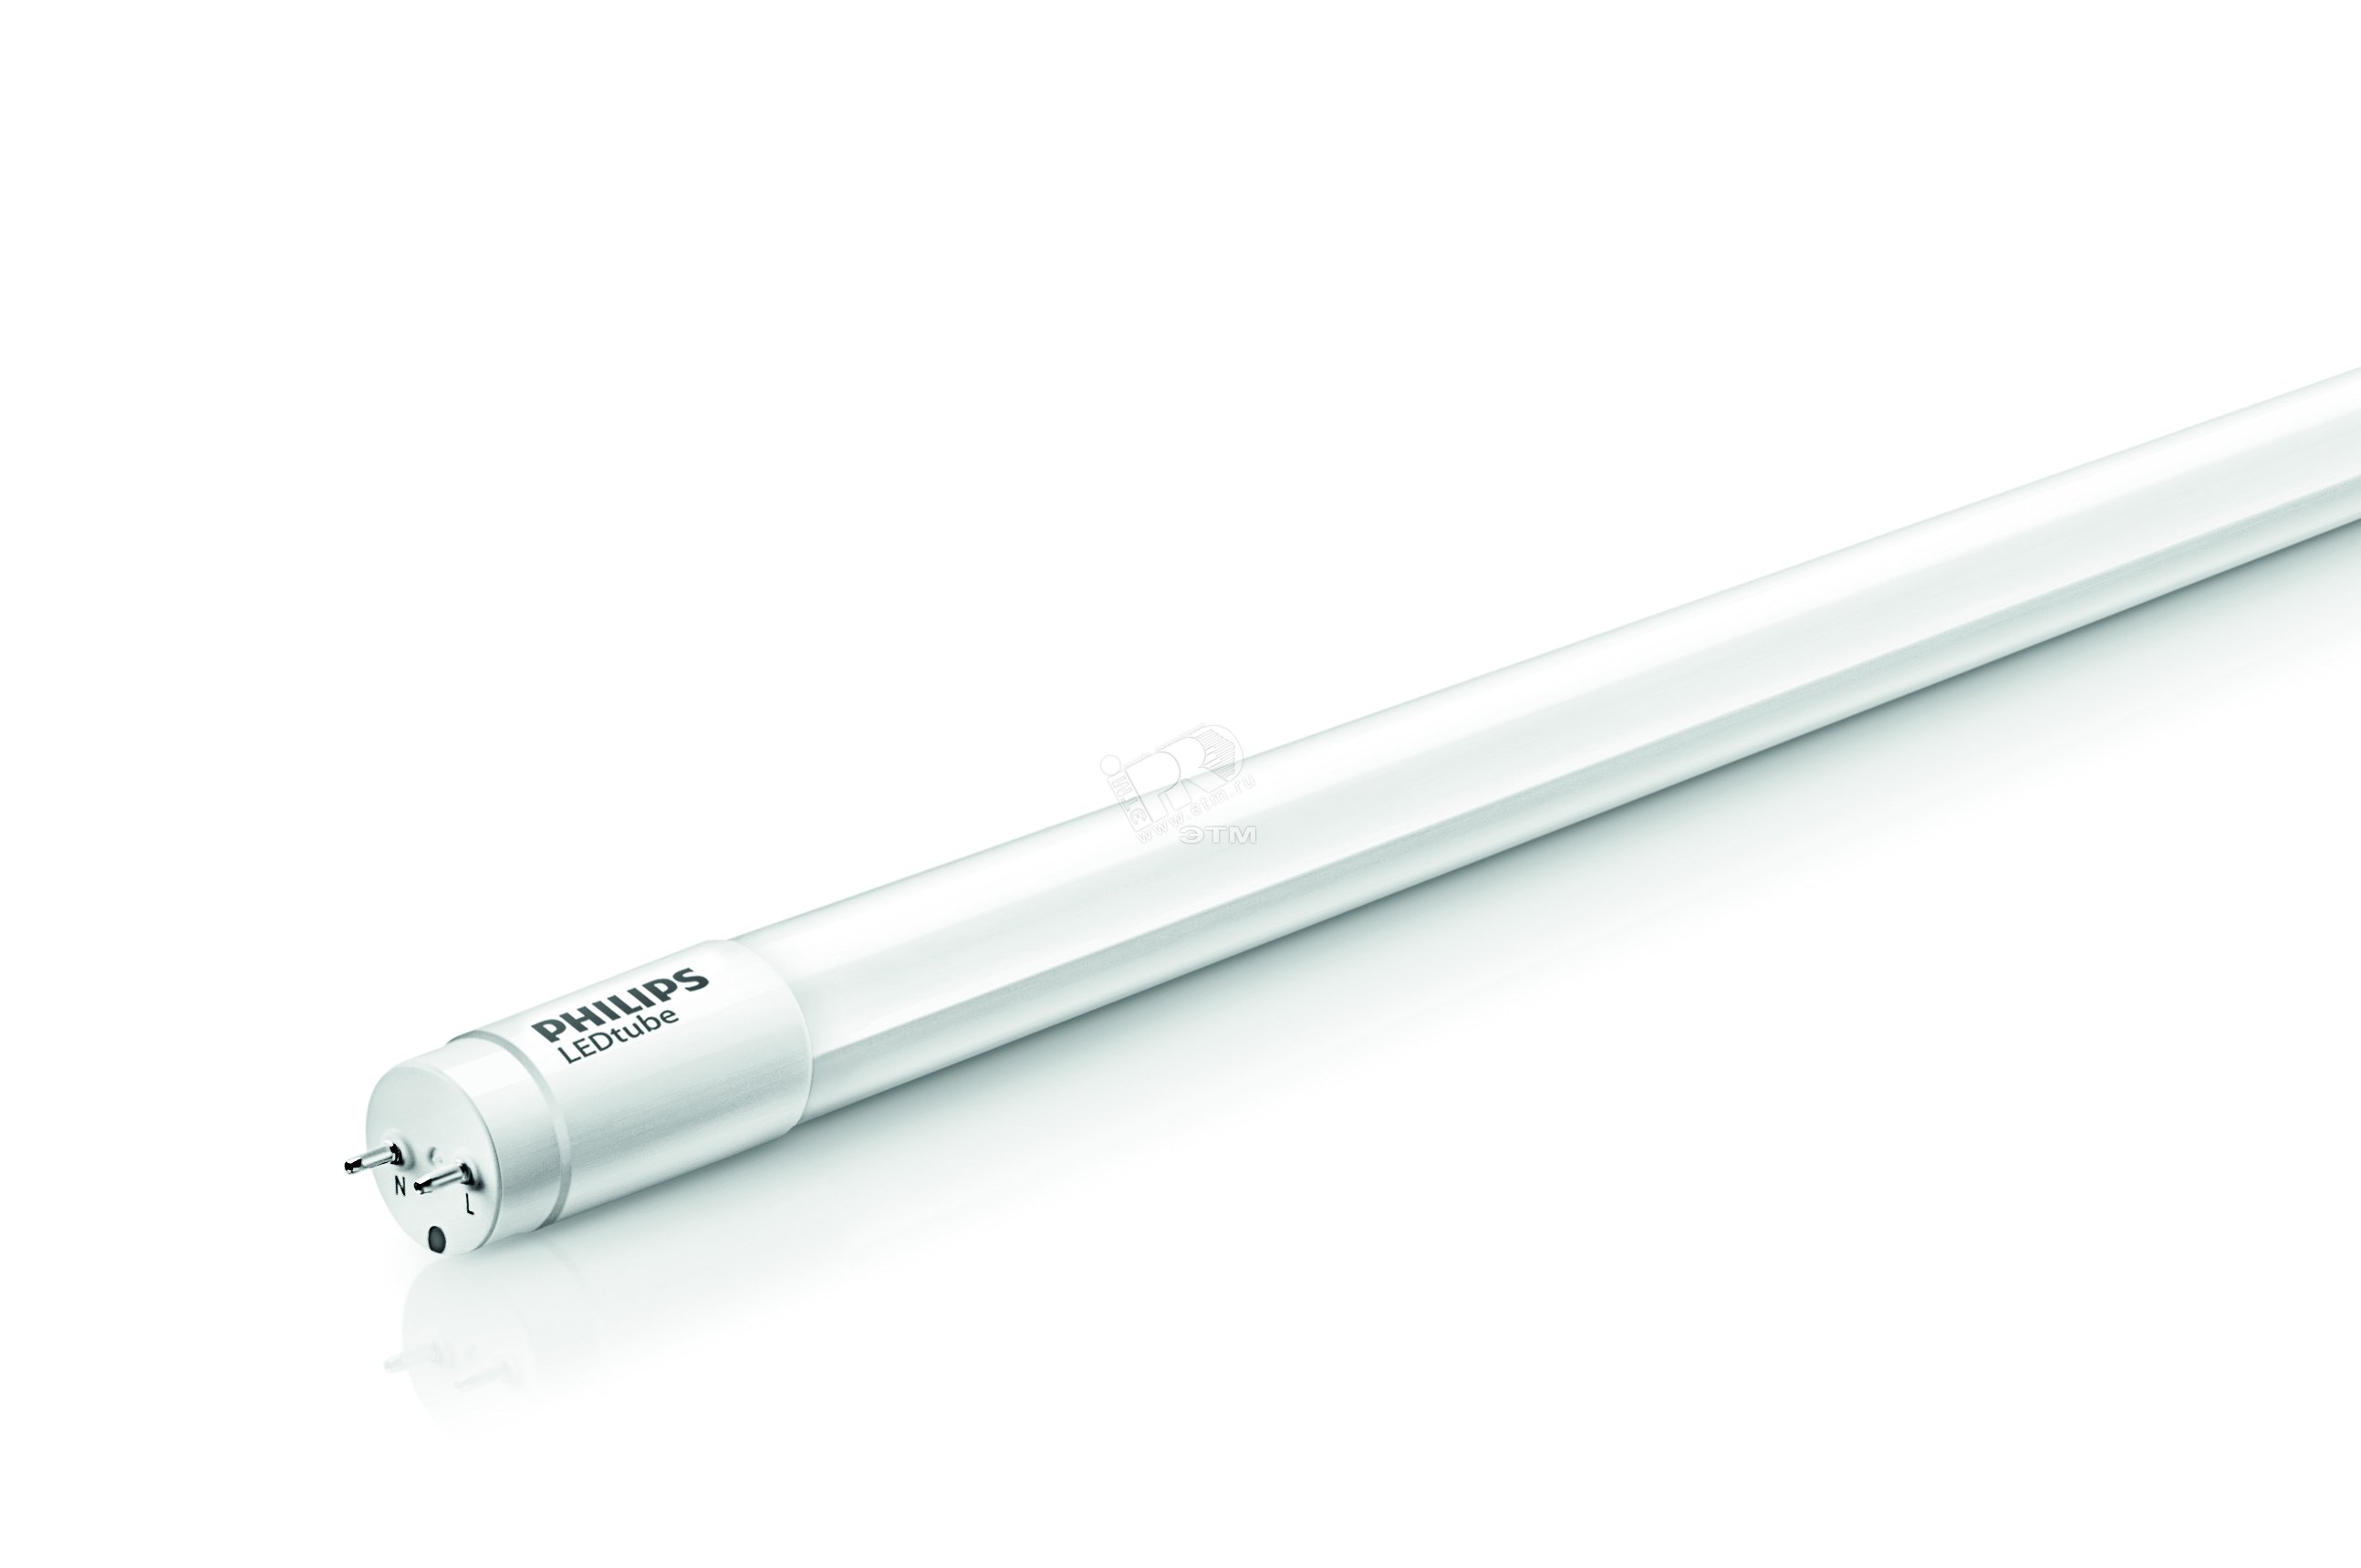 Лампа светодиодная LEDtube Essential 1200мм 16 Вт G13 840 белый гофра 929001173008 PHILIPS Lightning - превью 2